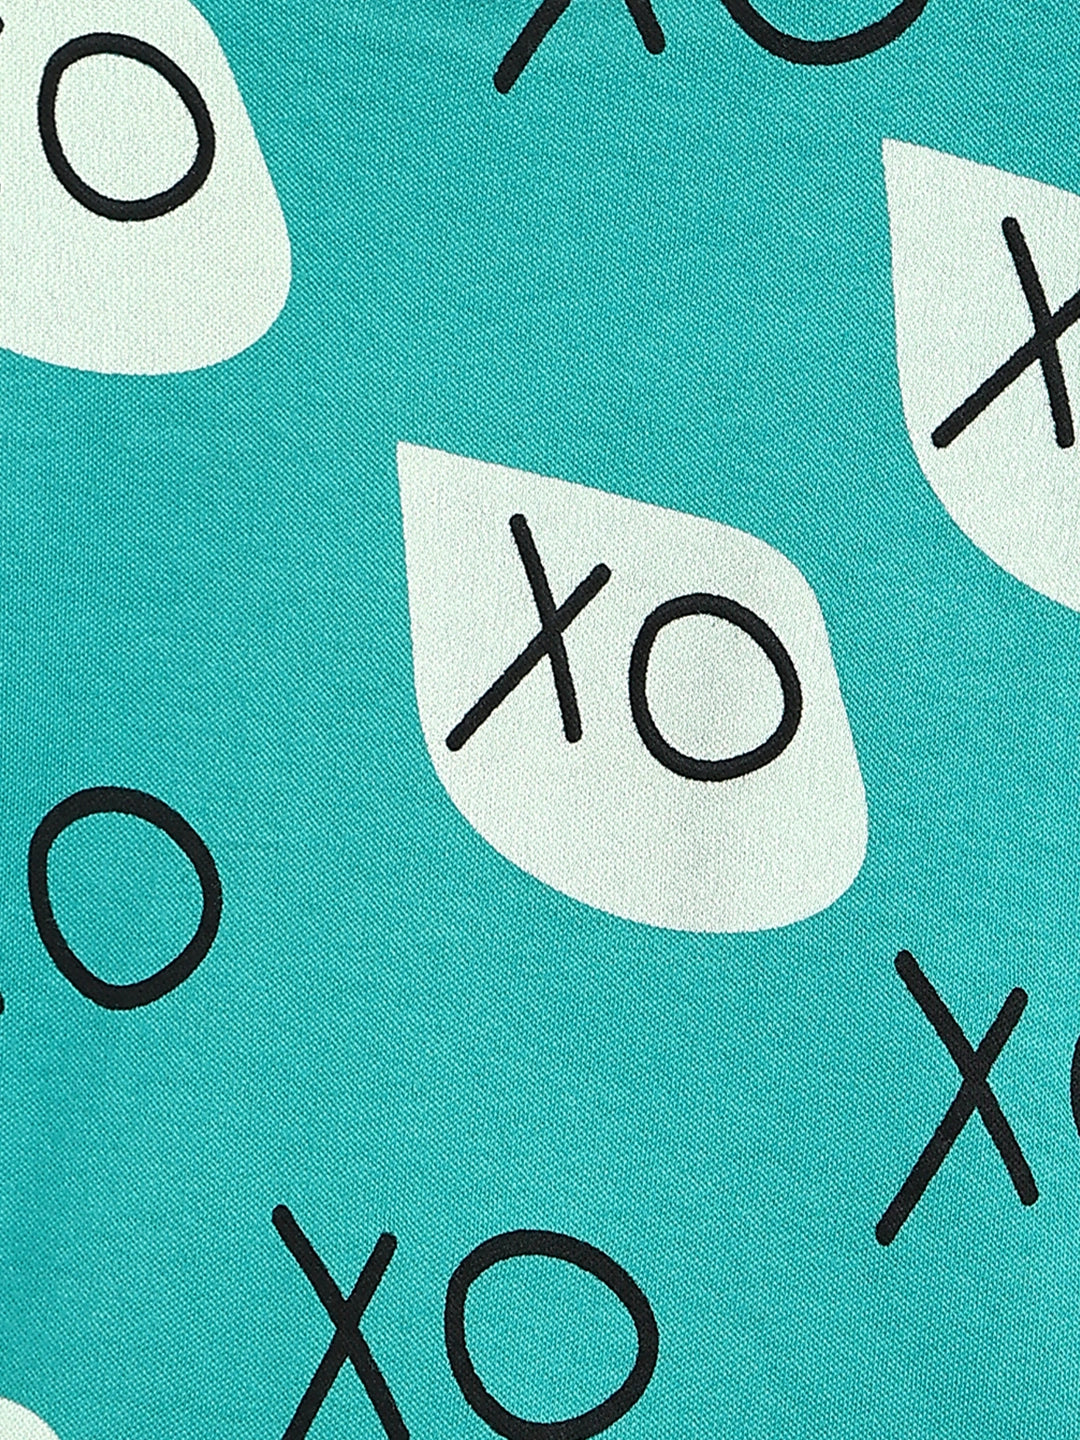 Classic Pyjama Sets Combo- Hashtag and Blue XO